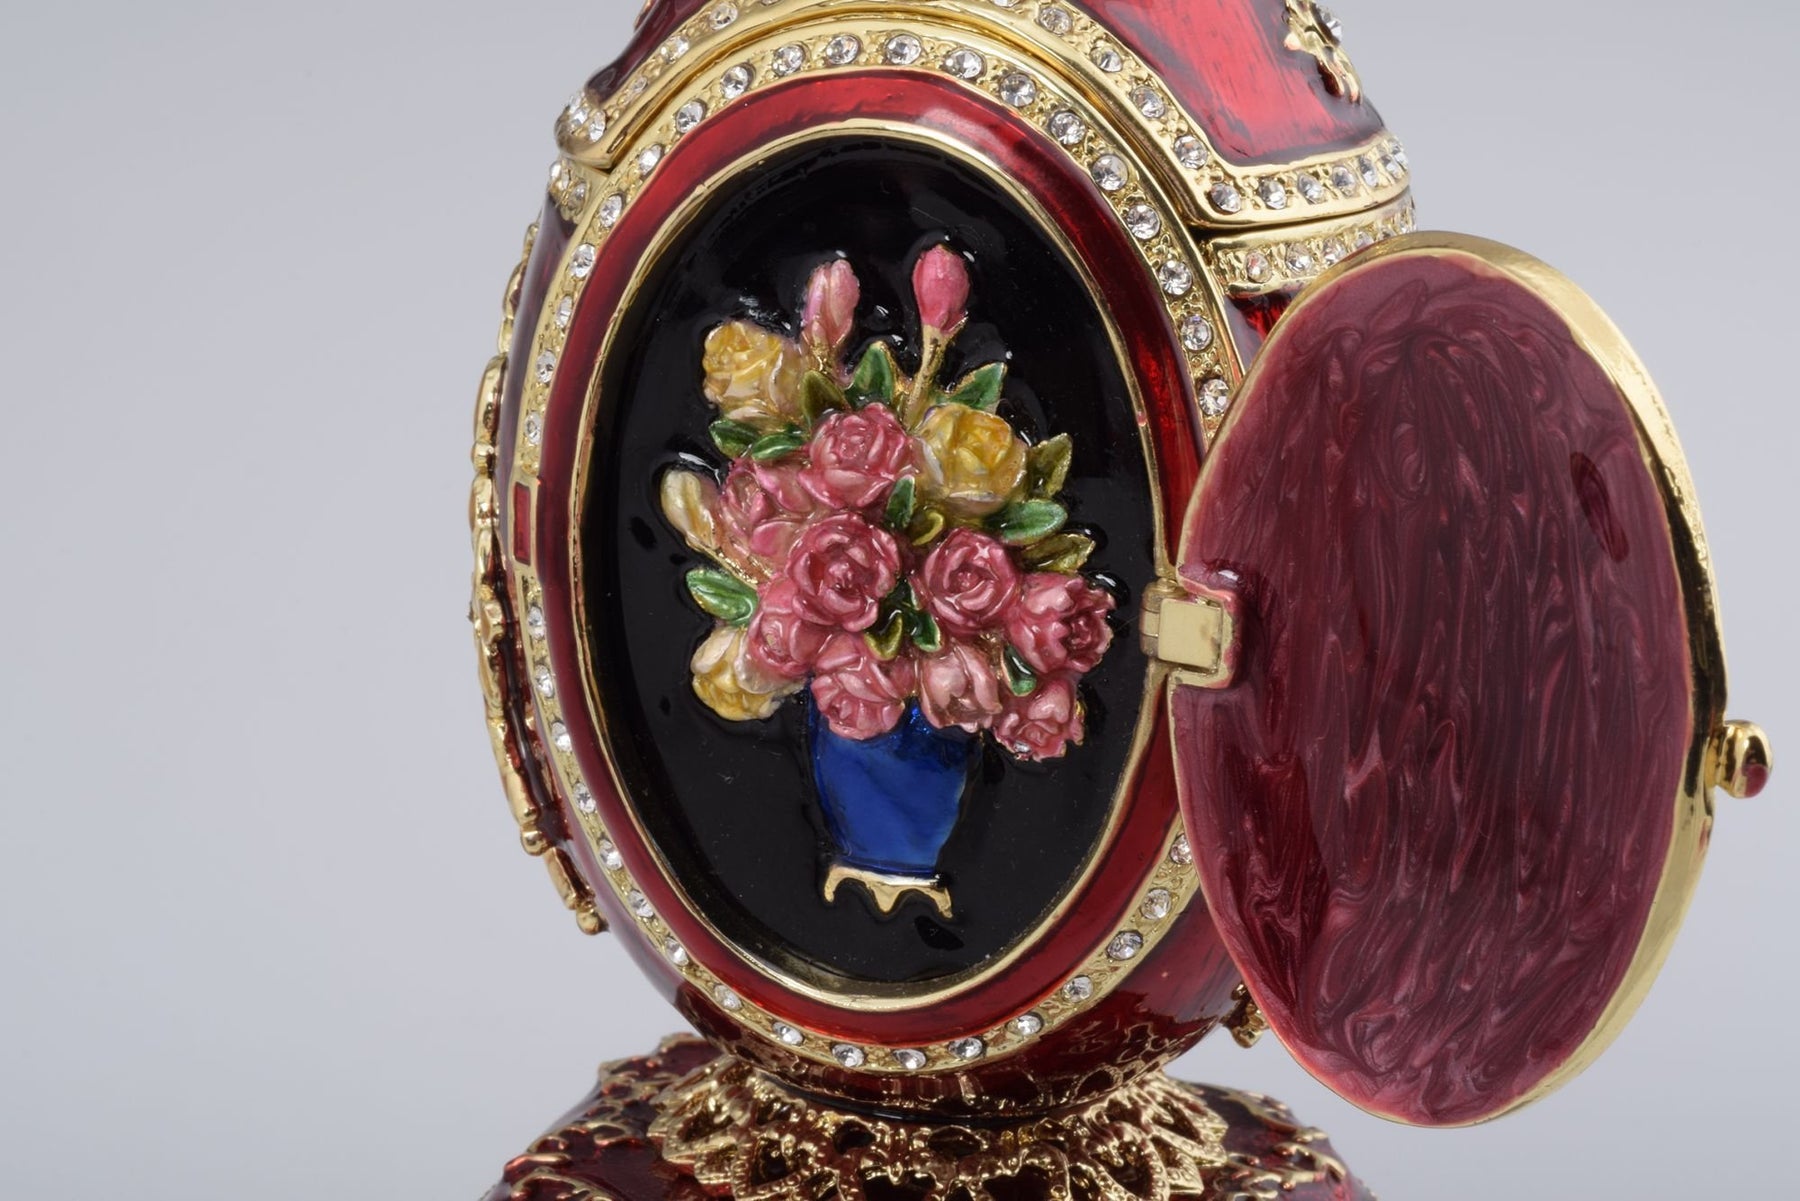 Keren Kopal Red Royal Faberge Egg  154.00